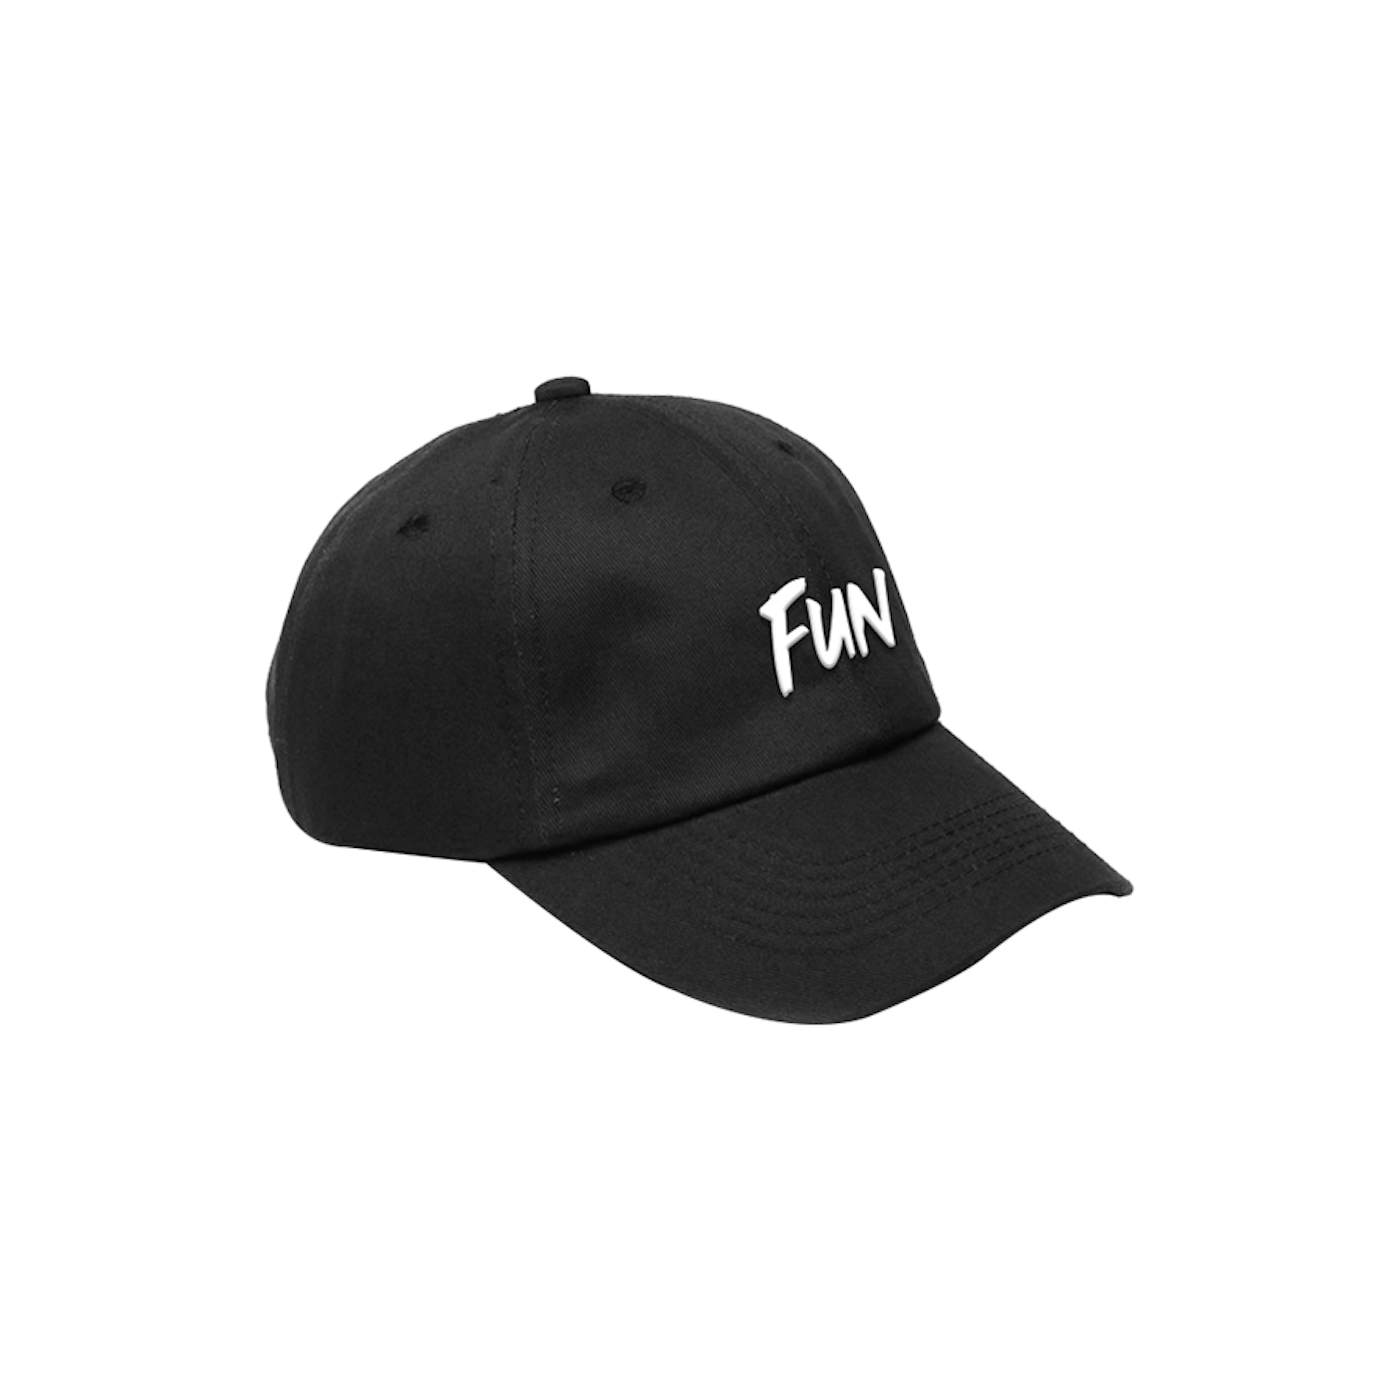 Ricky Dillon Fun Hat (Black)